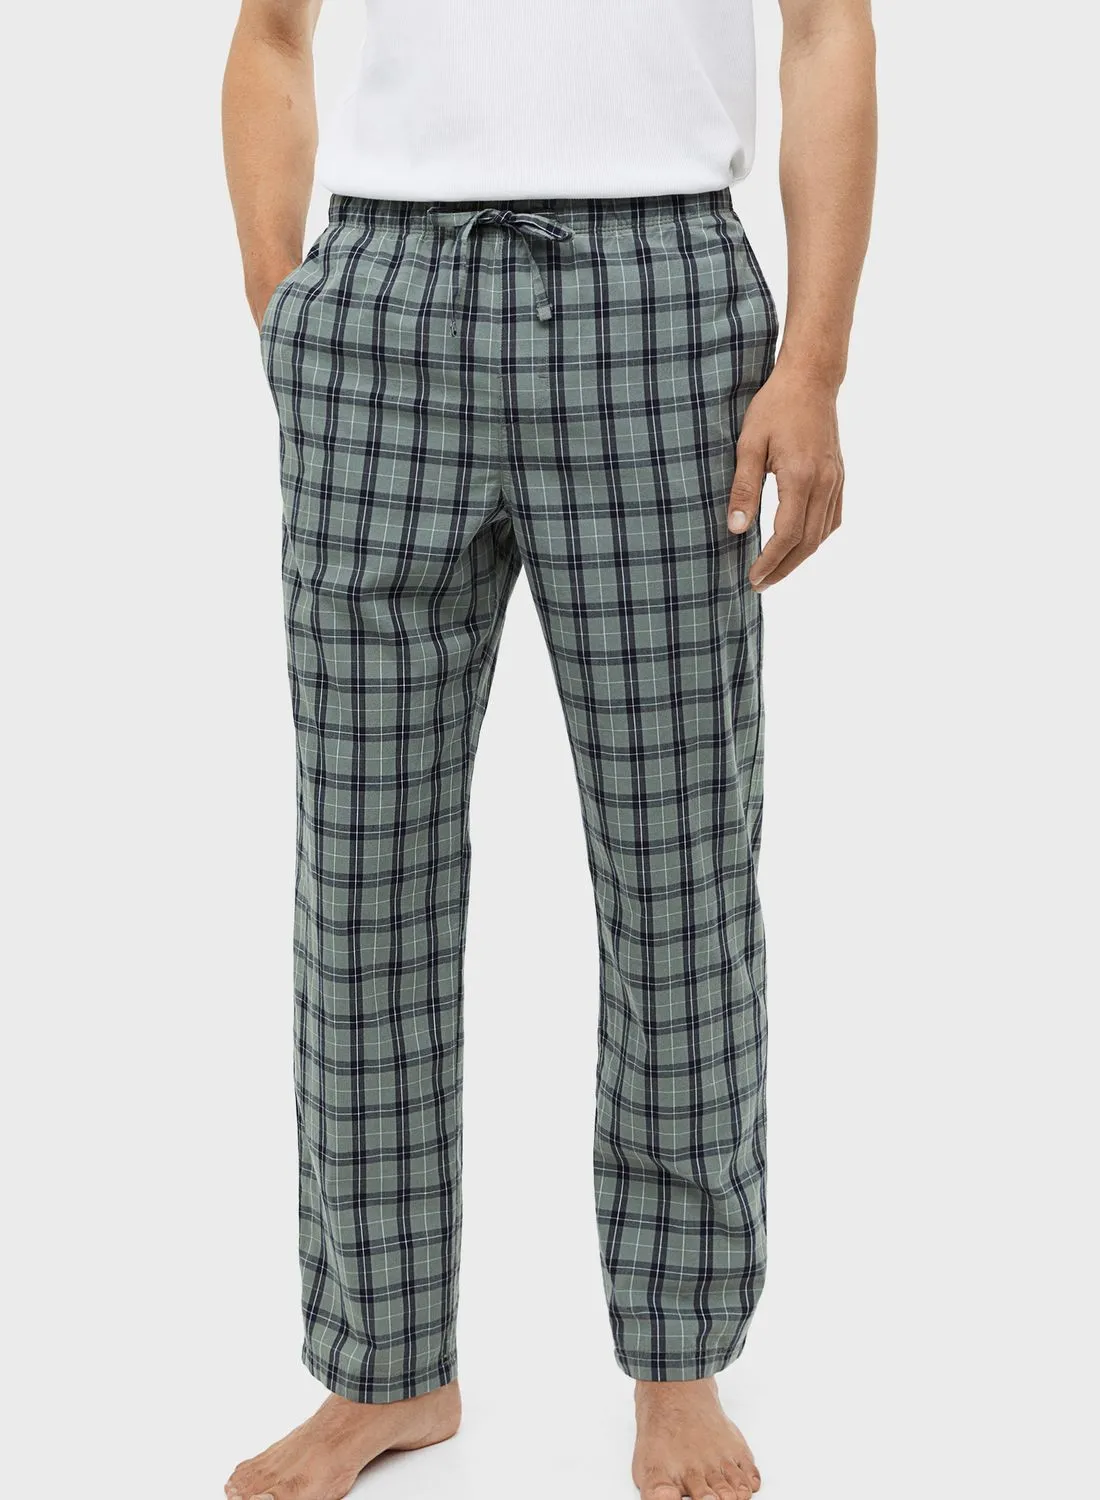 H&M Checked Pyjama Bottoms